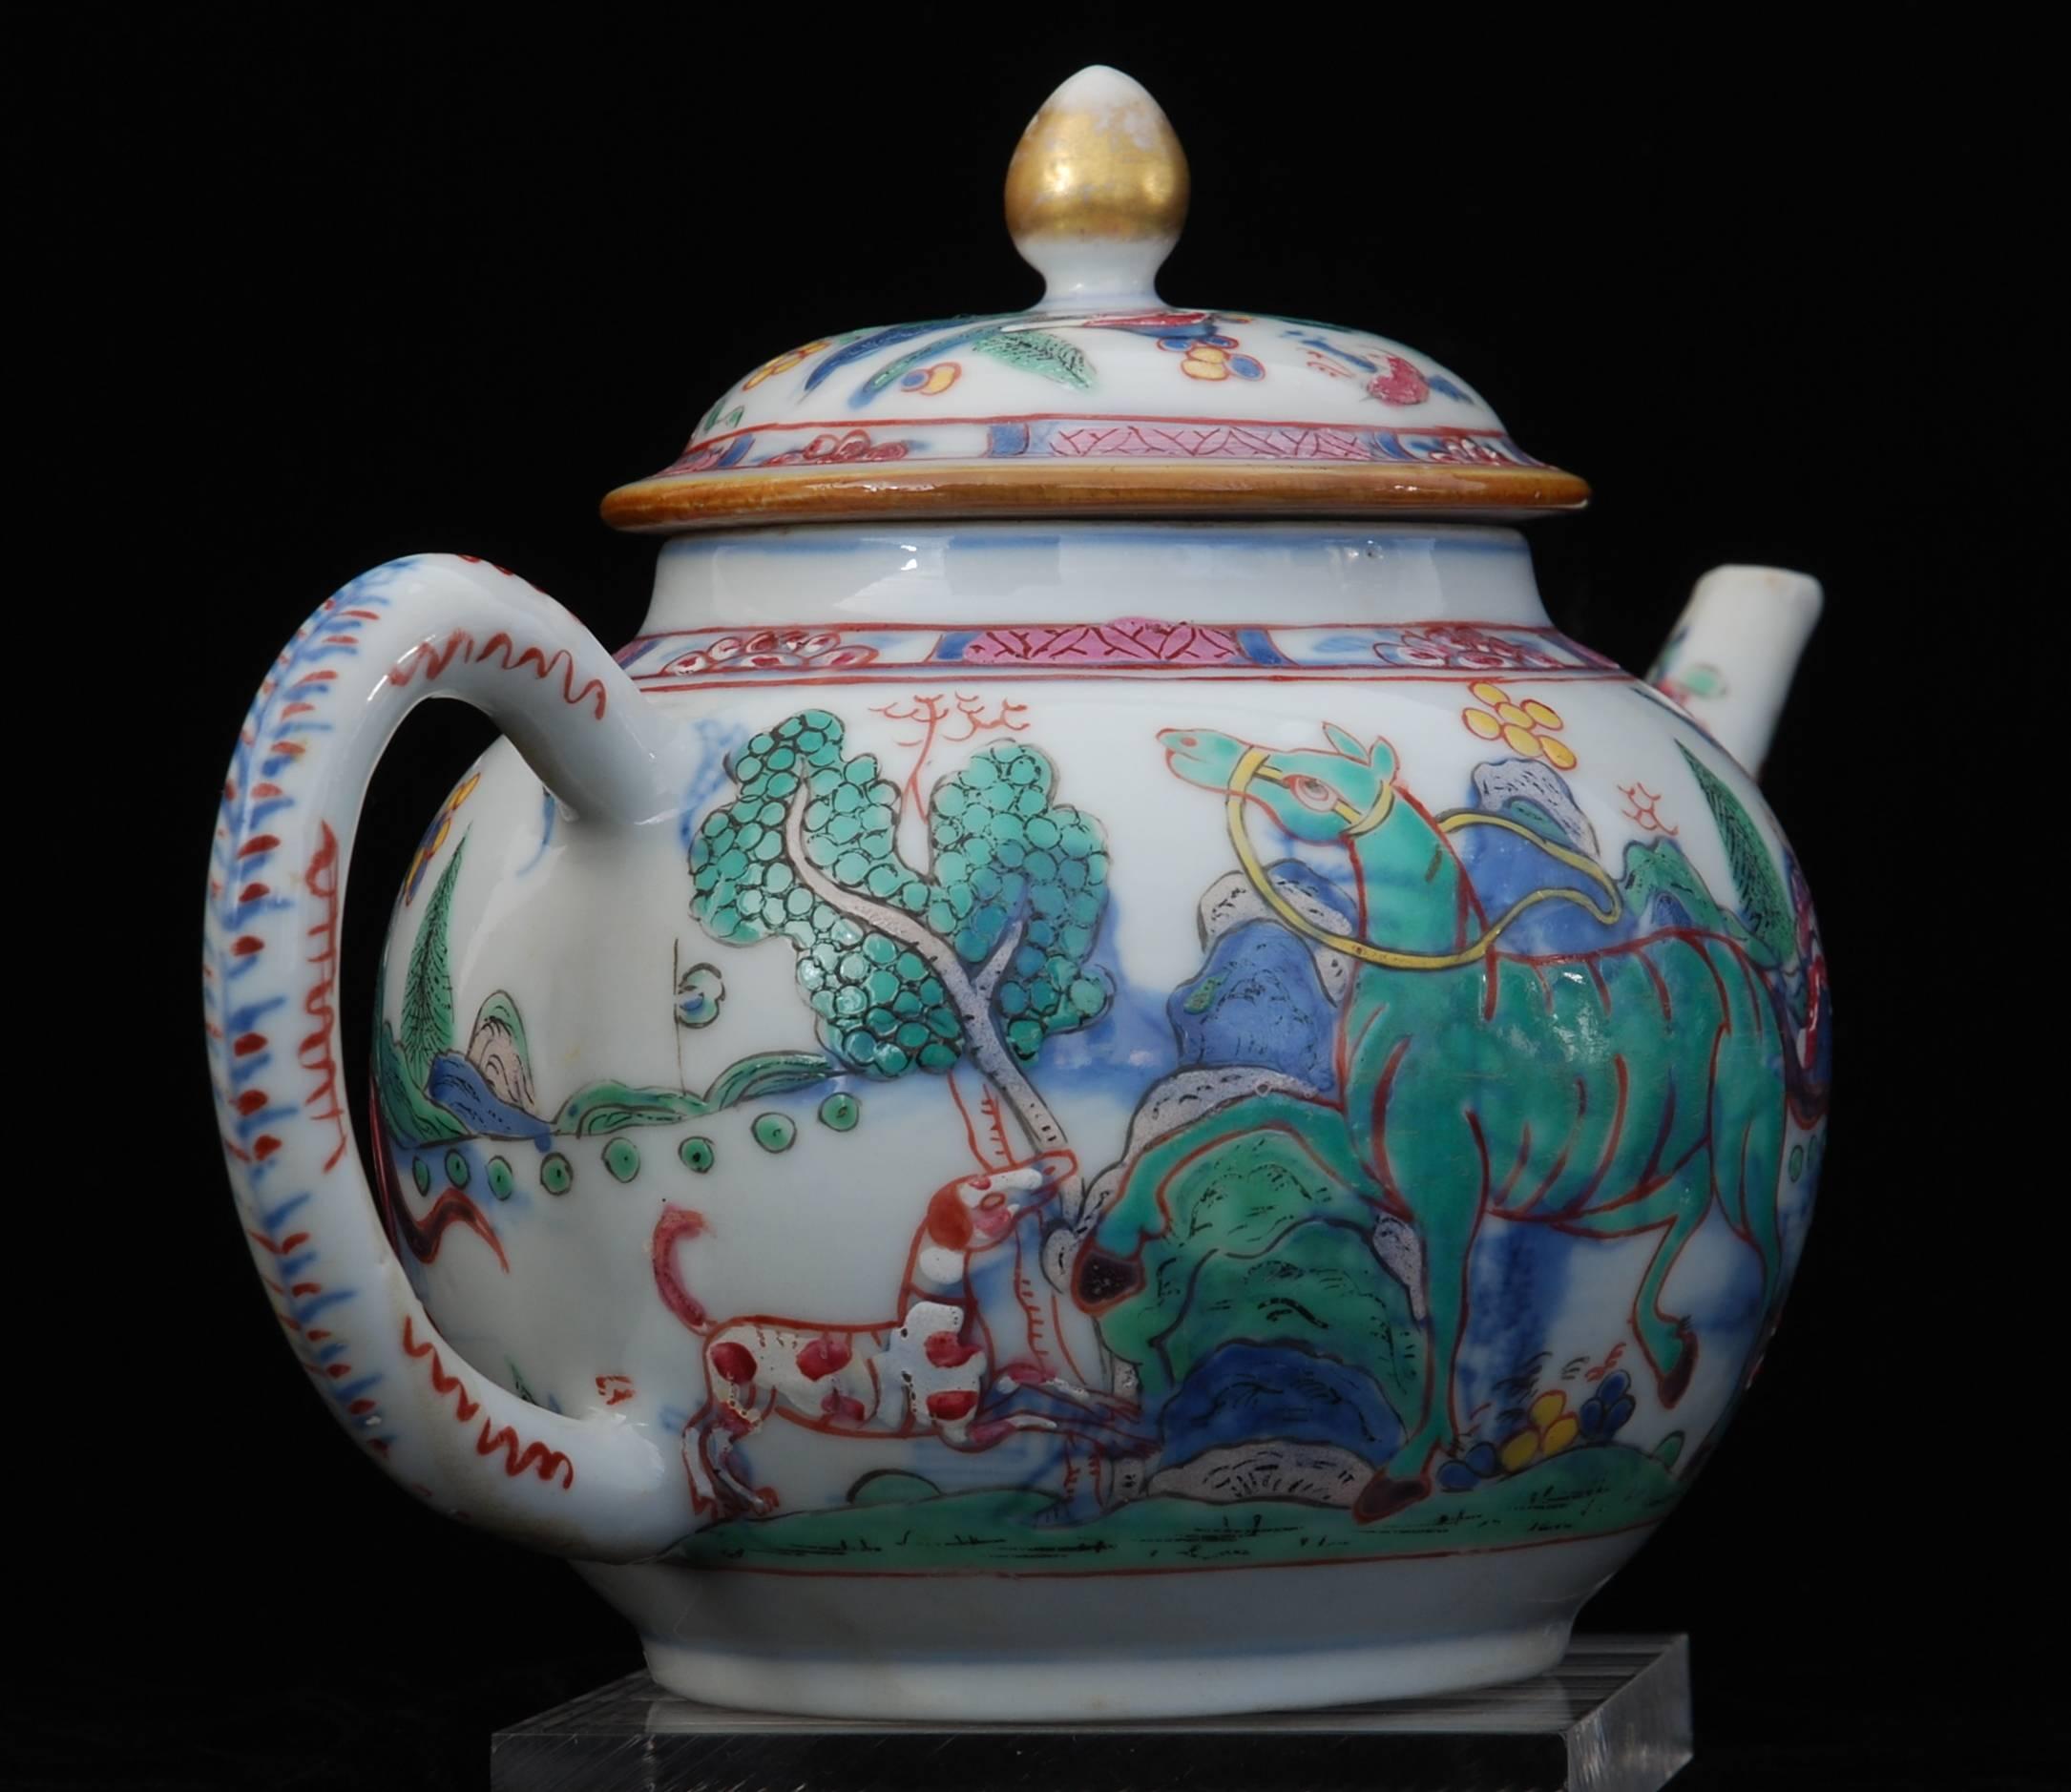 Teapot, Prancing Ponies, China, circa 1760, Decorated in London 1